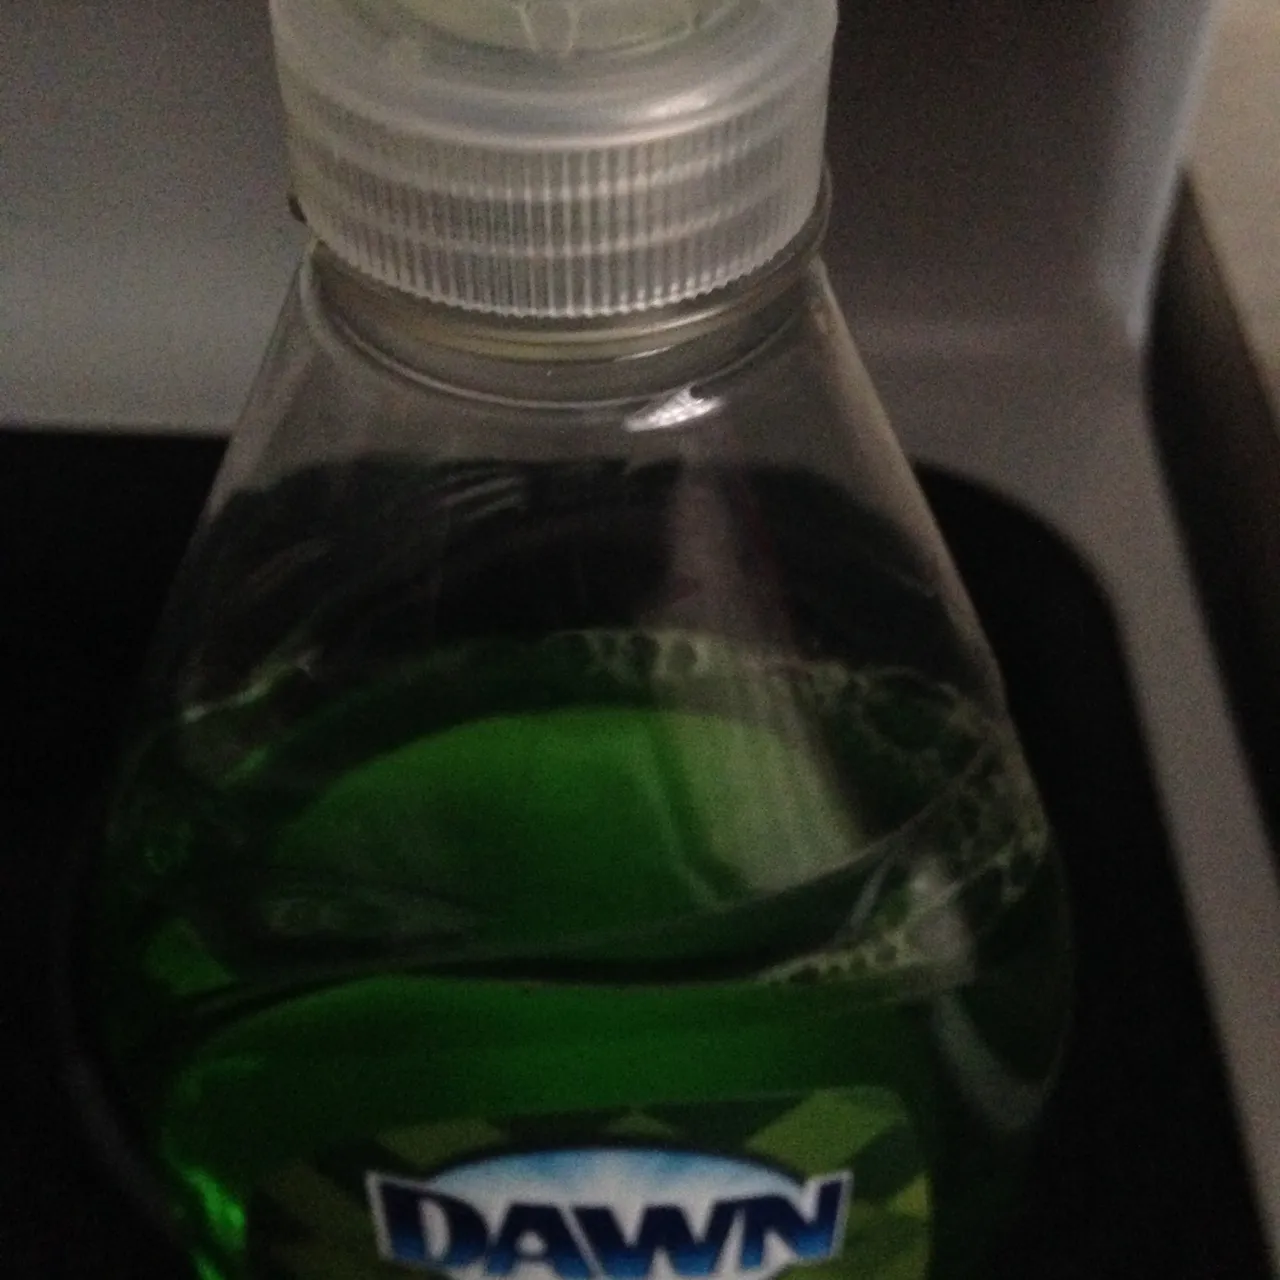 Dawn Dishwashing Soap photo 1